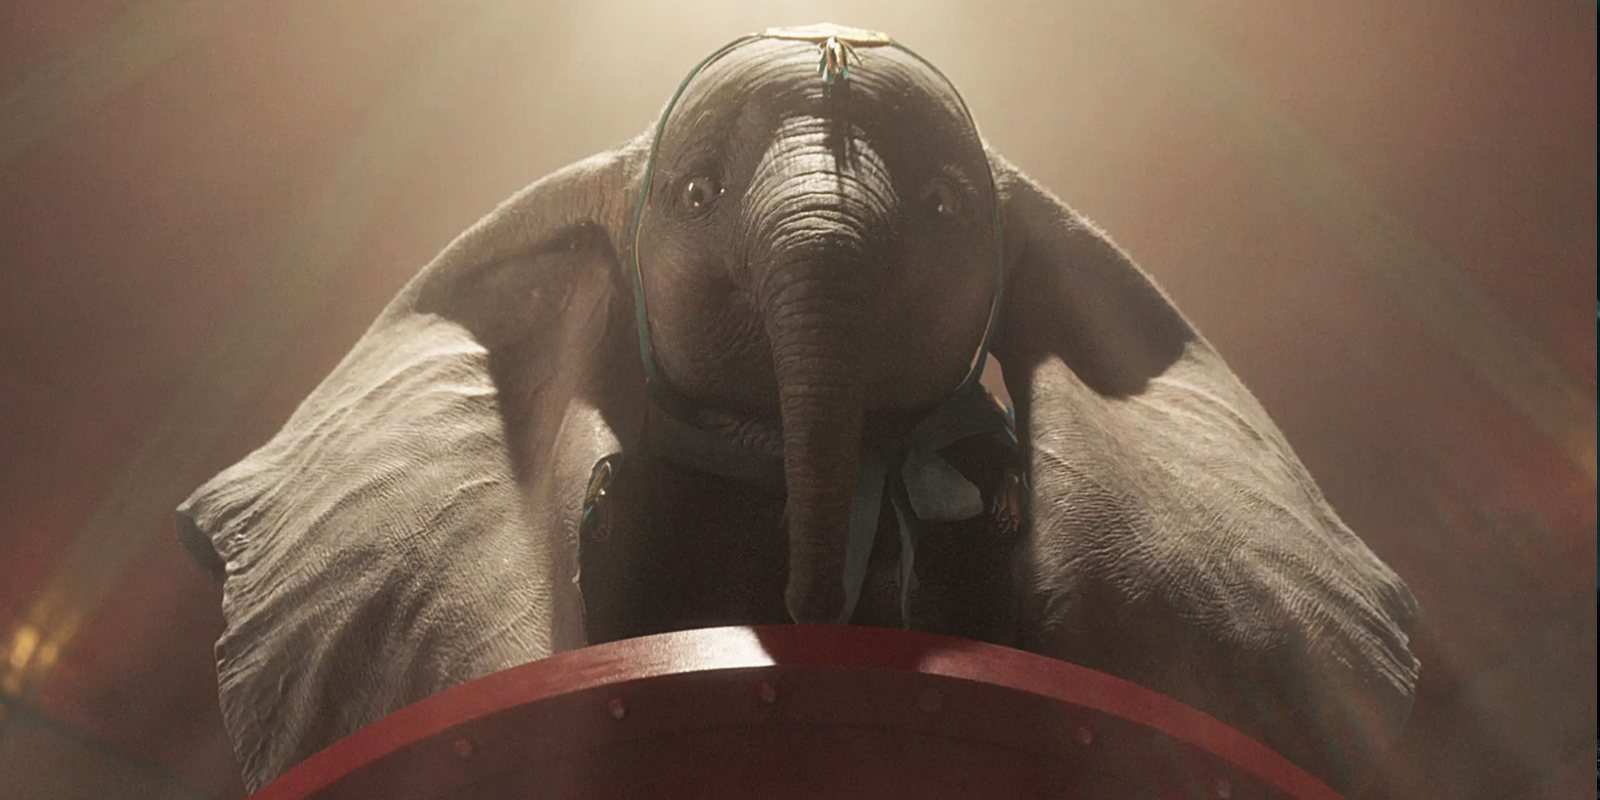 El 'Dumbo' de Tim Burton lidera la taquilla en un fin de semana sin sorpresas